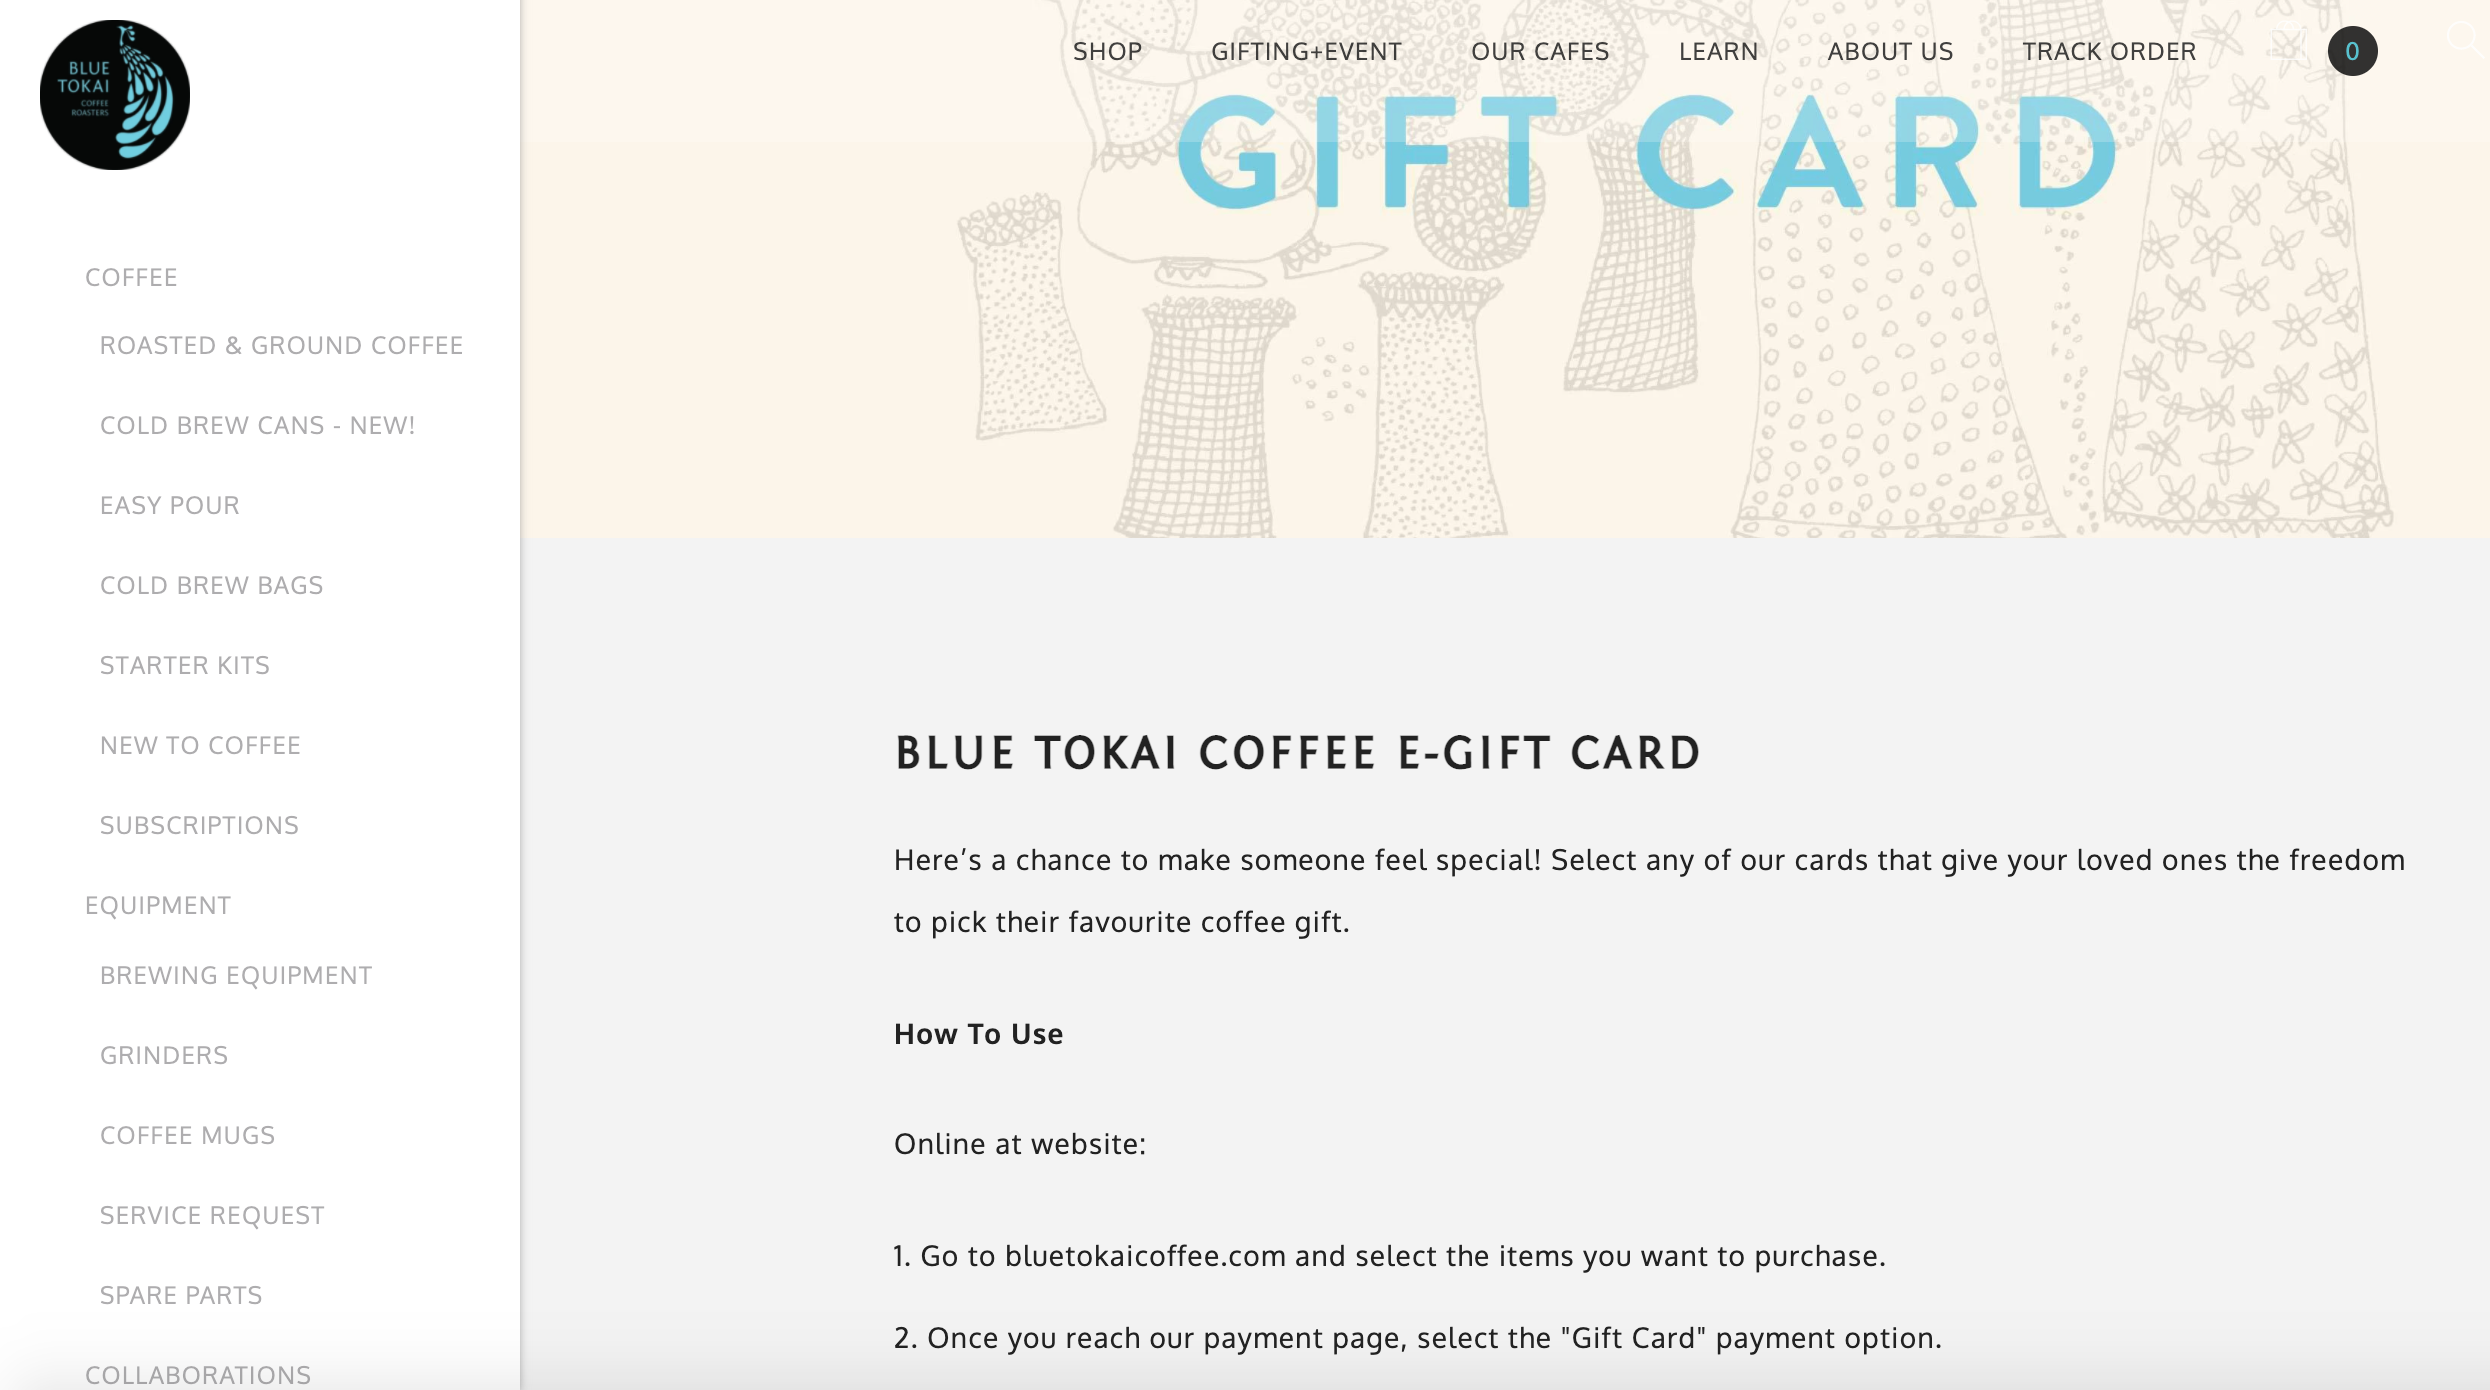 shopify gift card example - blue tokai